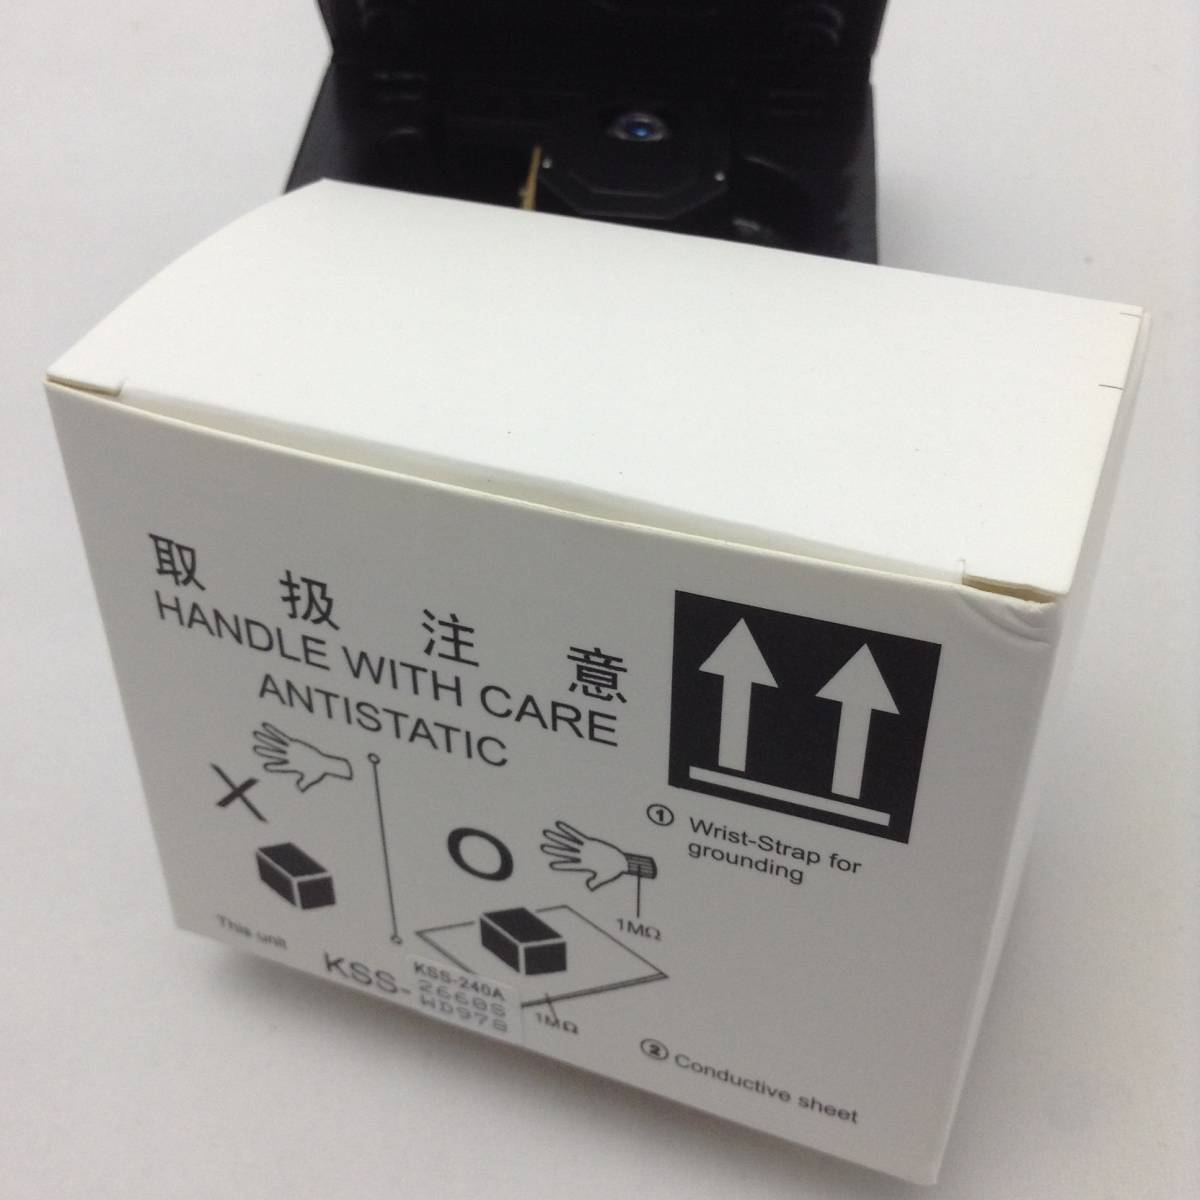  interchangeable goods CD pick up Sony KSS-240A light pick up optics lens exchange repair audio 